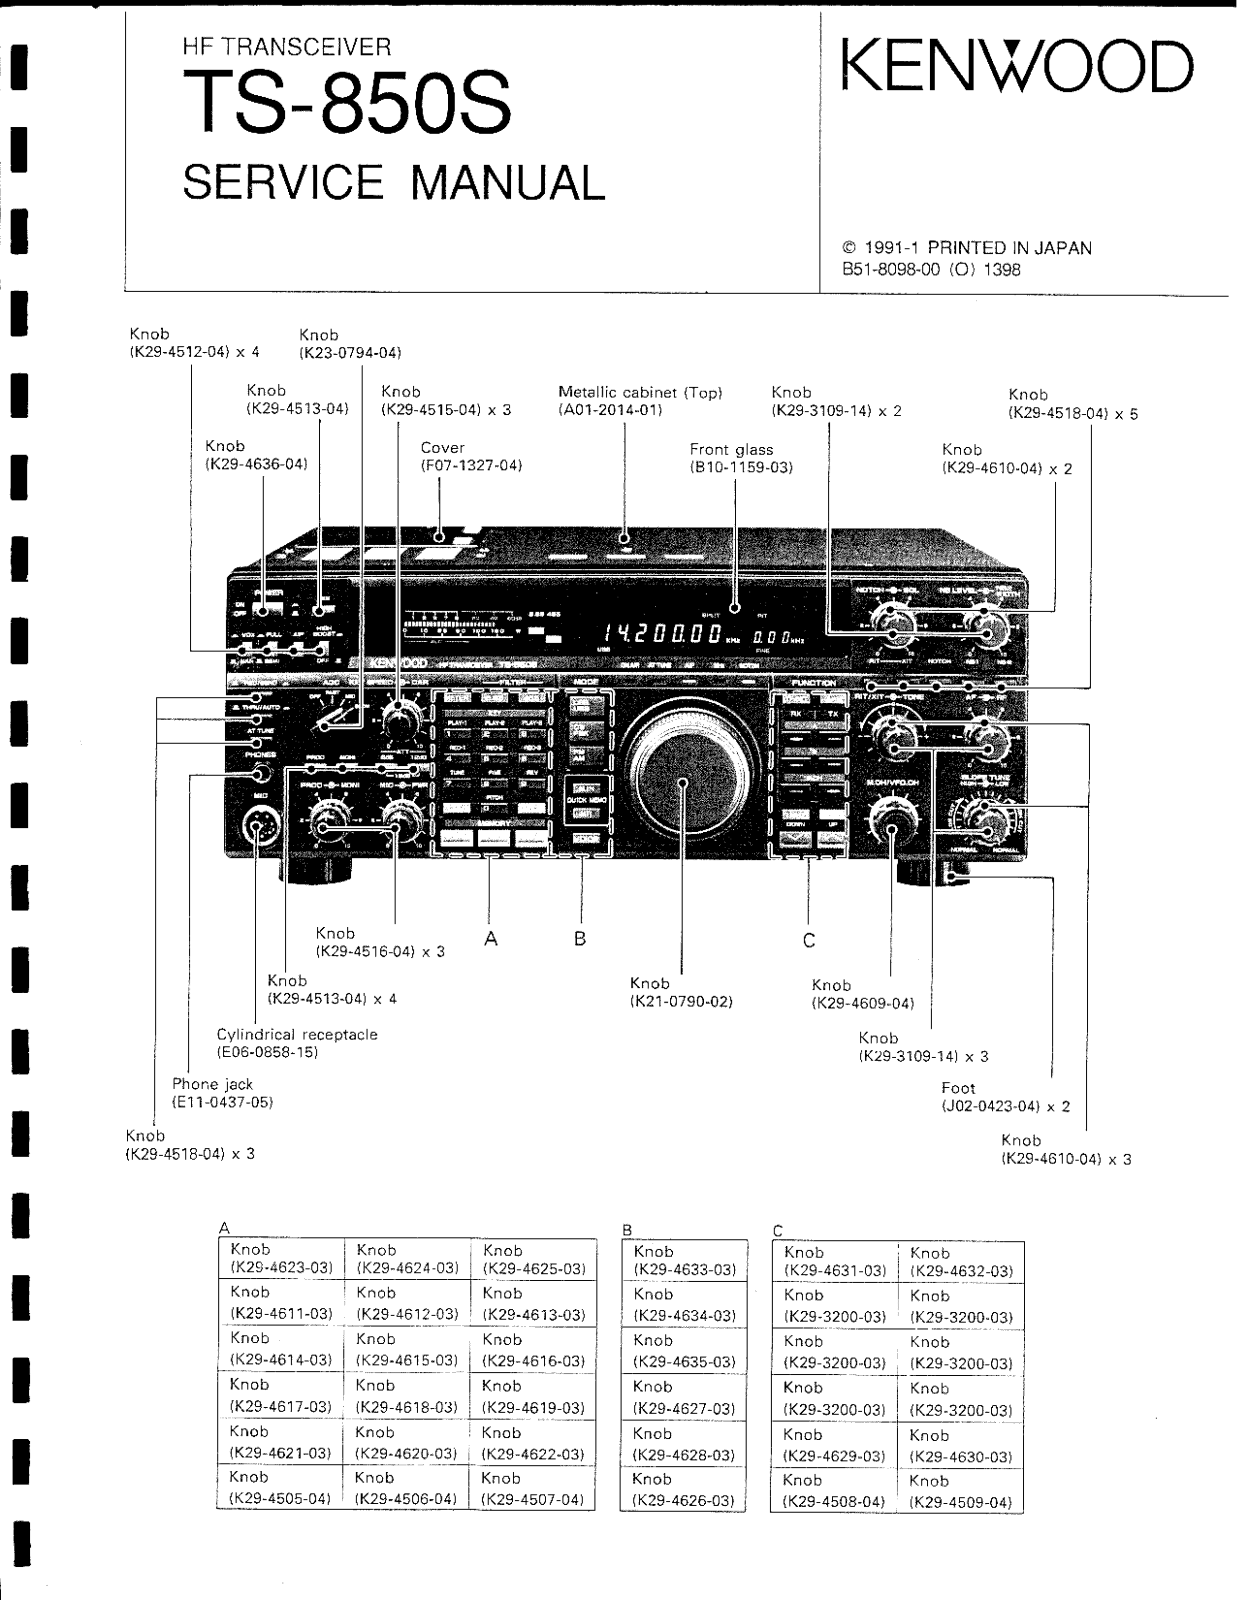 Kenwood TS-850S User Manual